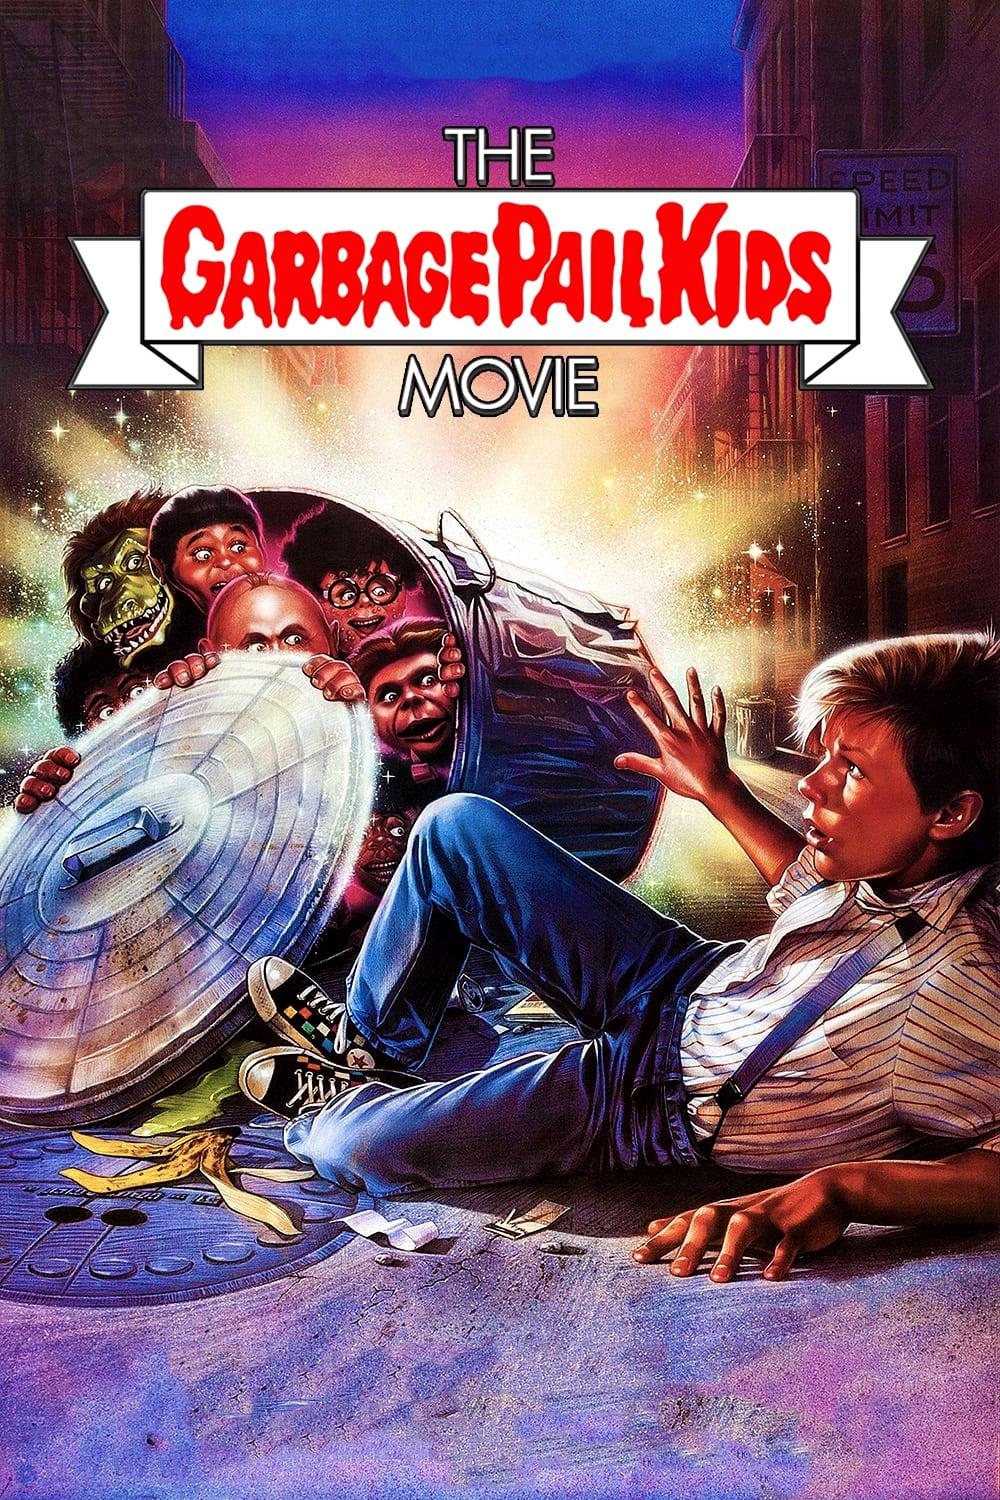 The Garbage Pail Kids Movie poster